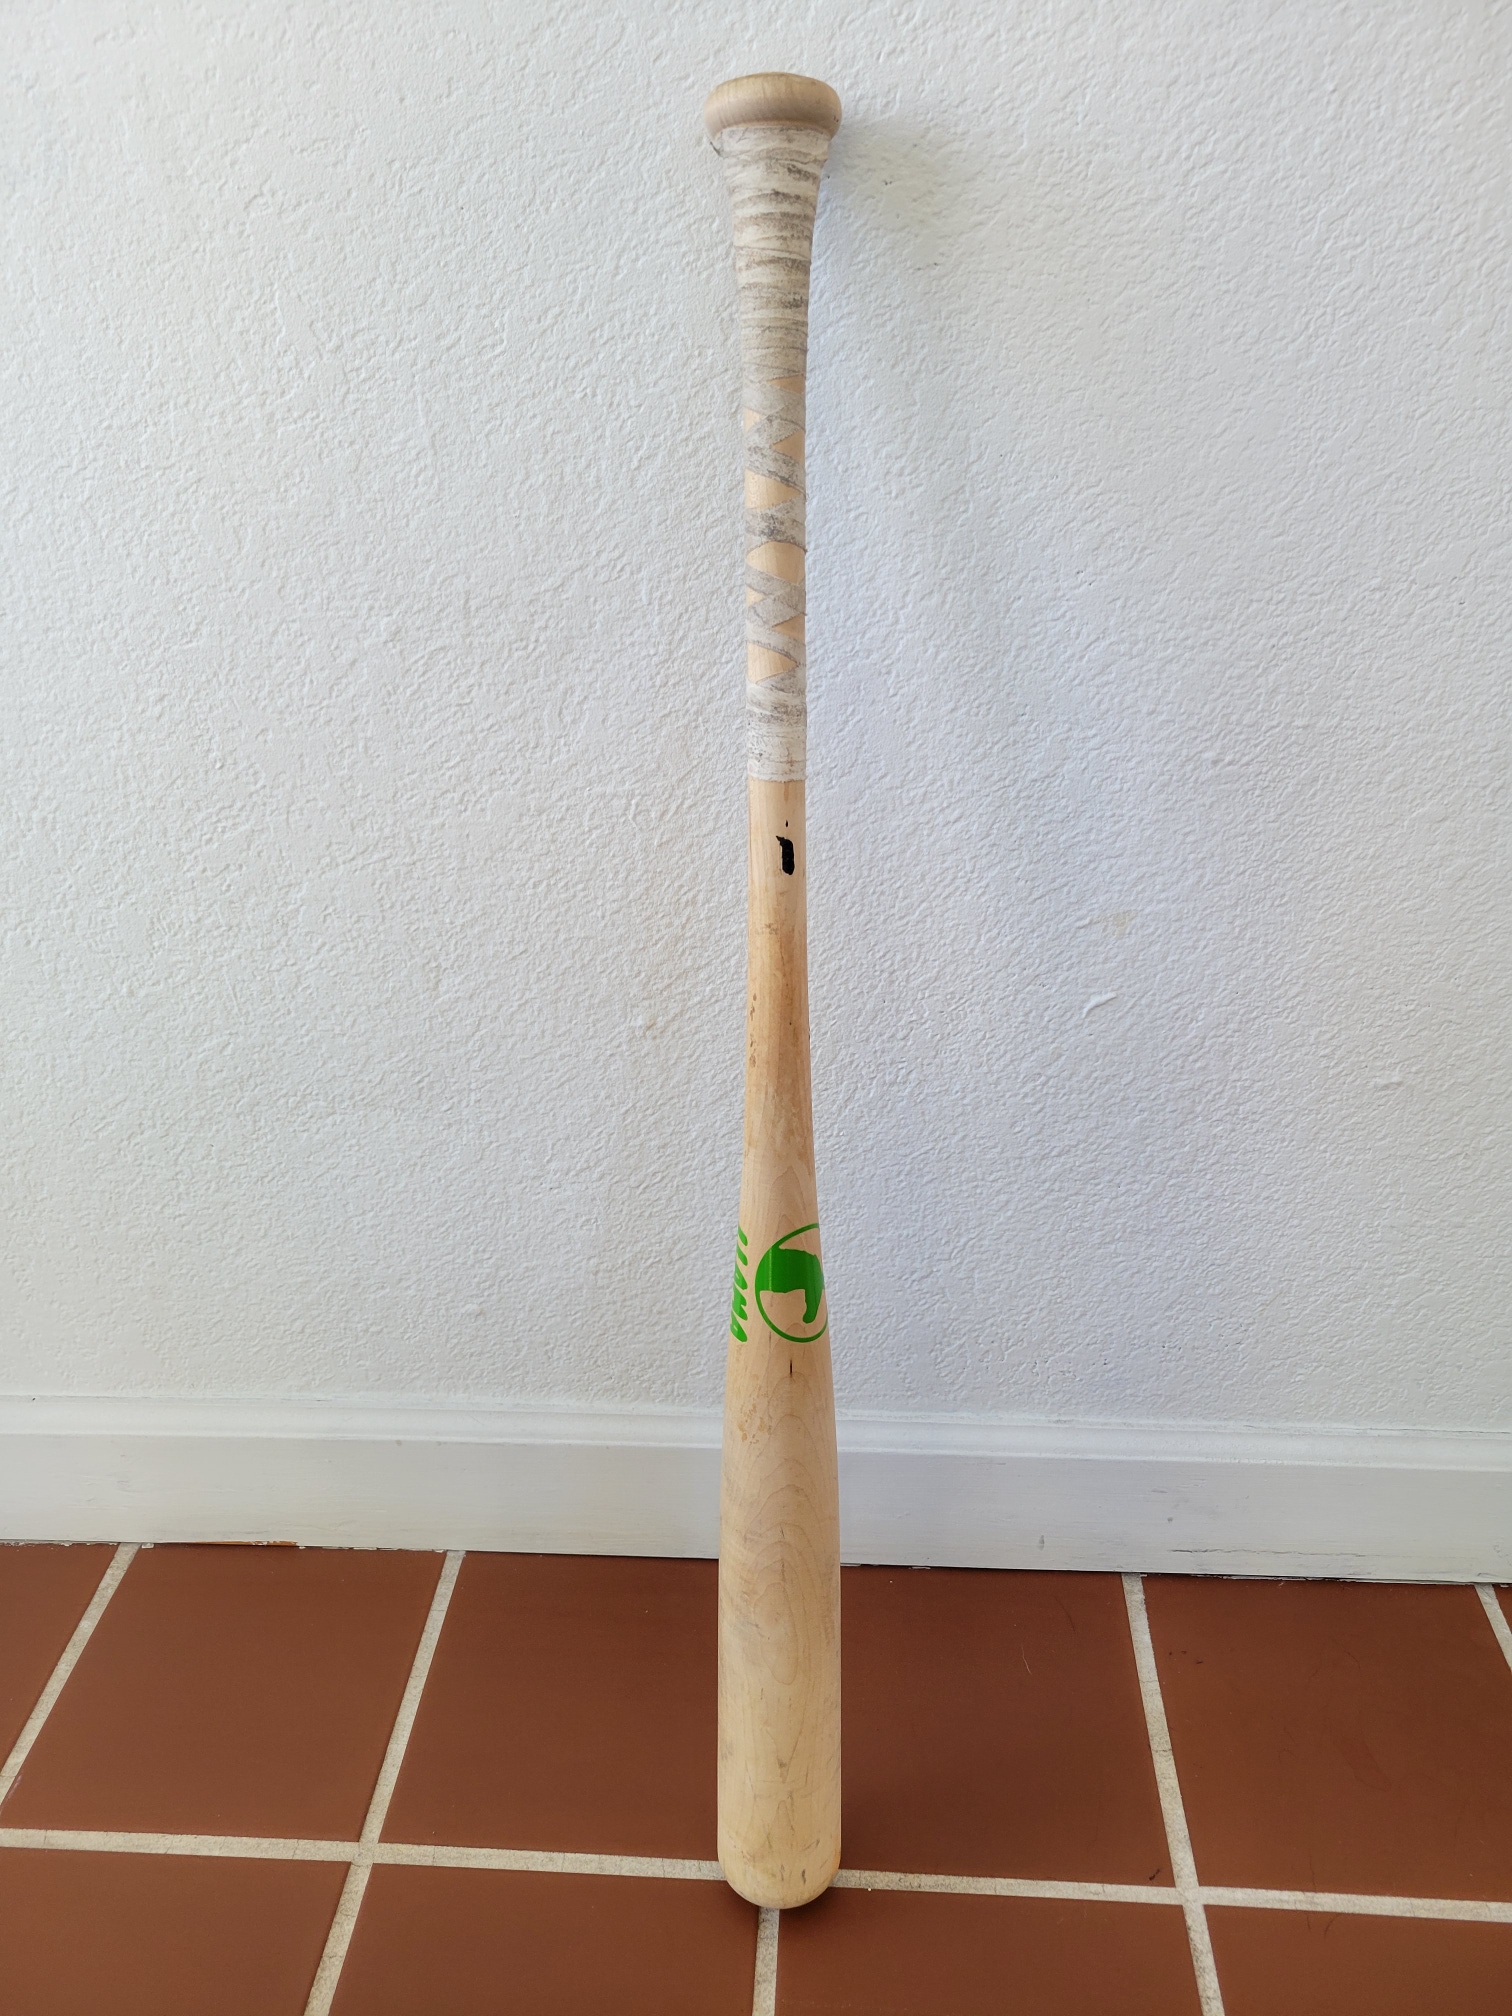 Llama Pro Maple Bat (-3) 29 oz 32"